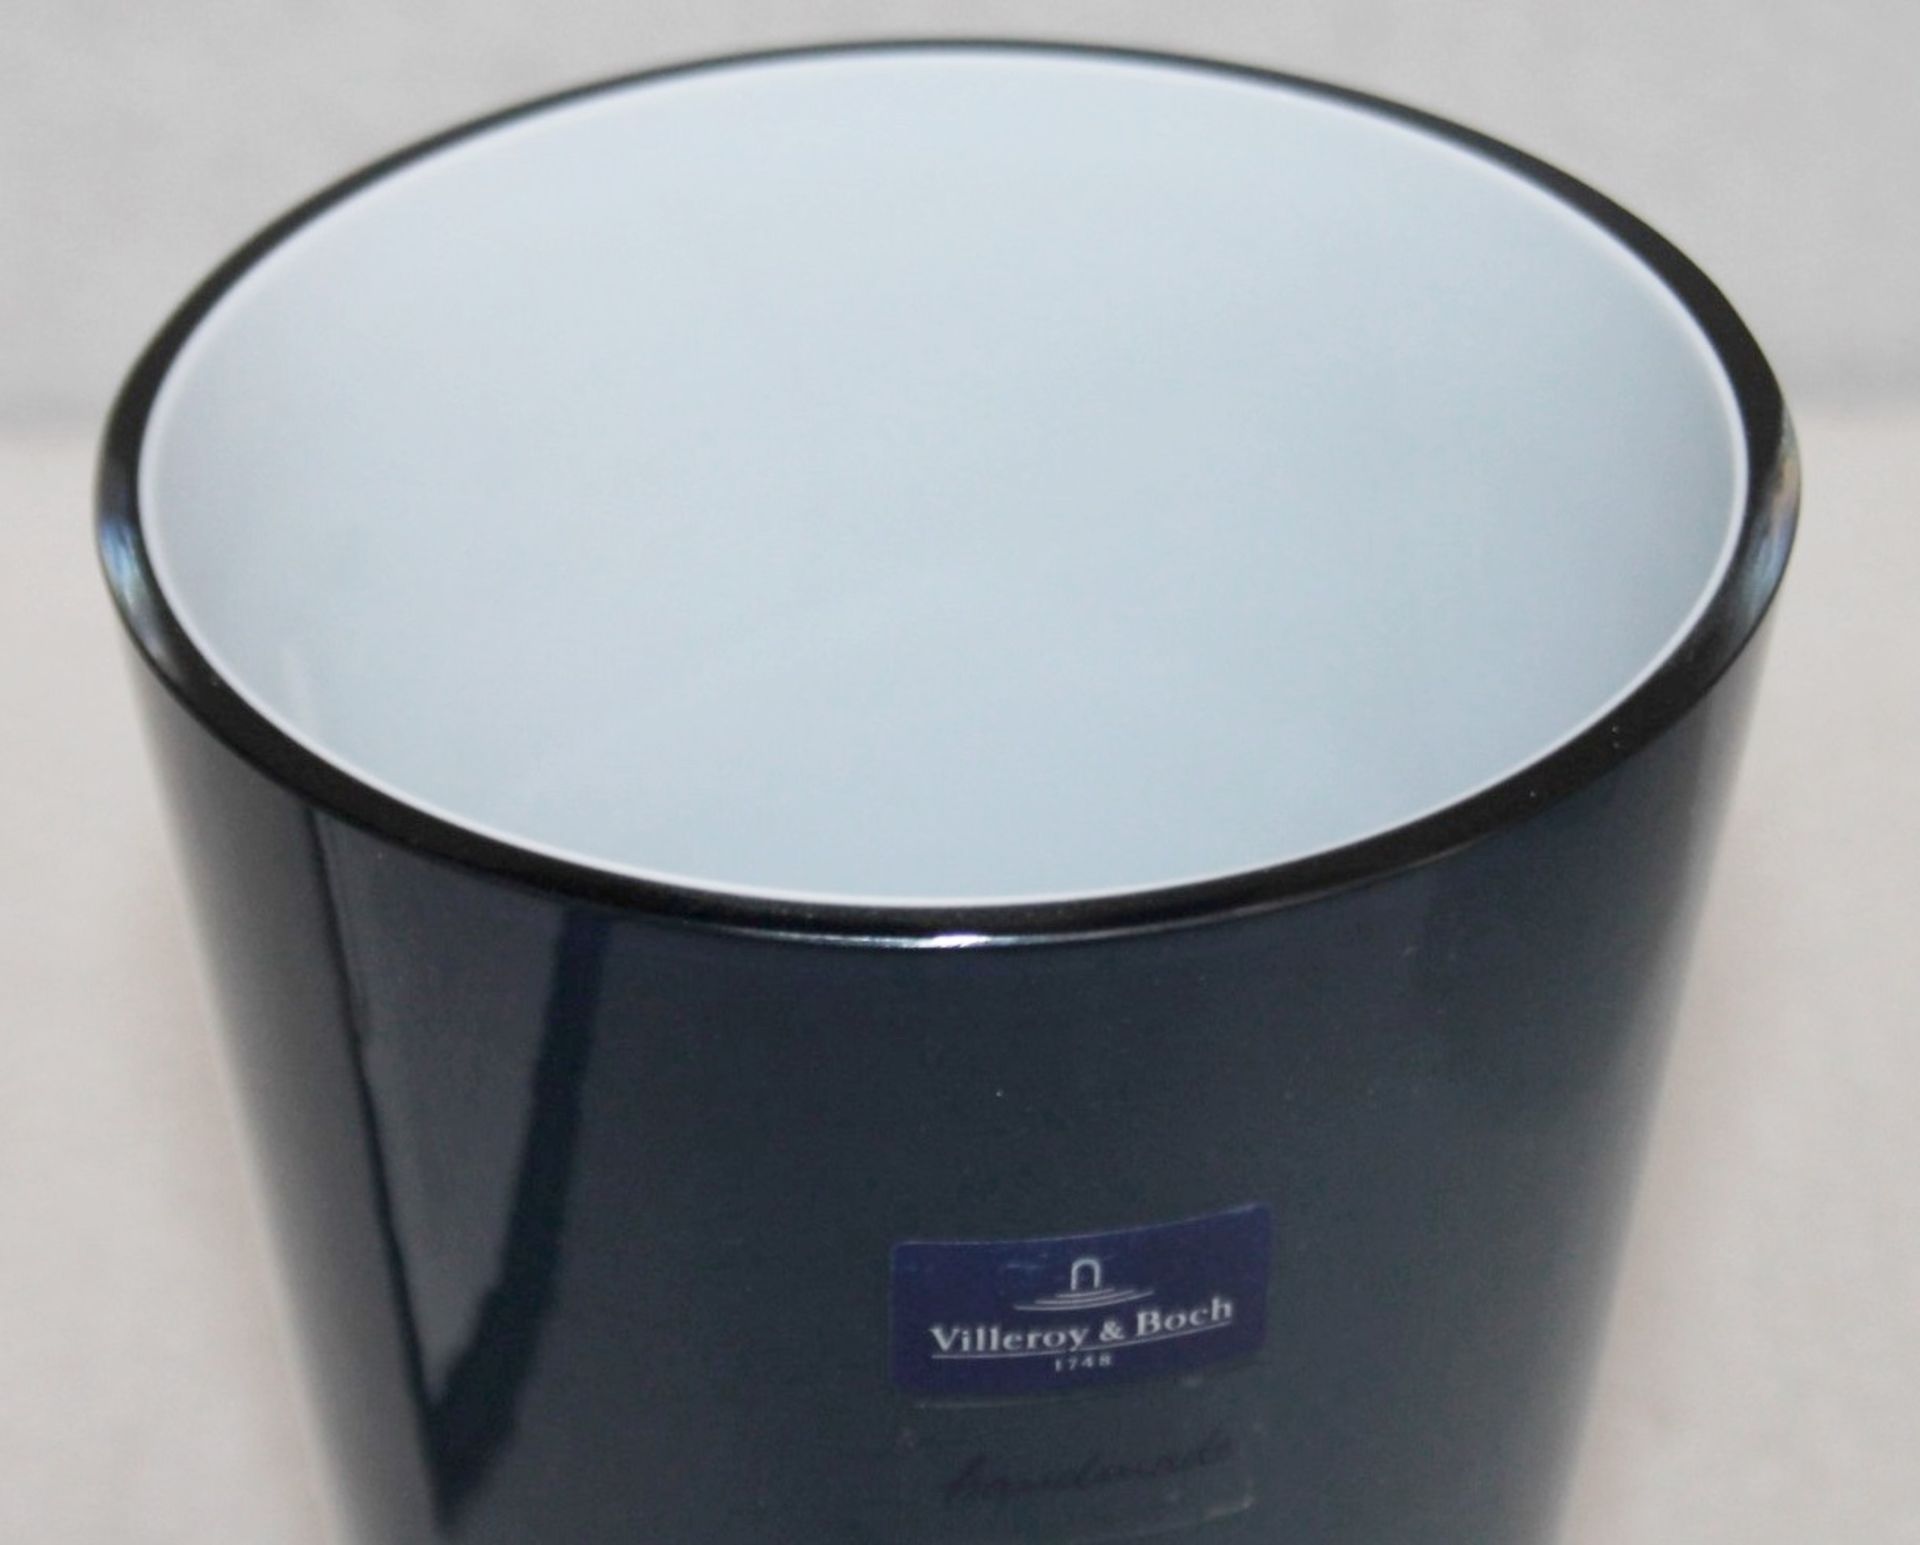 1 x VILLEROY & BOCH 'Verso' Glass Vase Midnight Sky (25cm) - Original Price £72.90 - Boxed Stock - Image 4 of 8